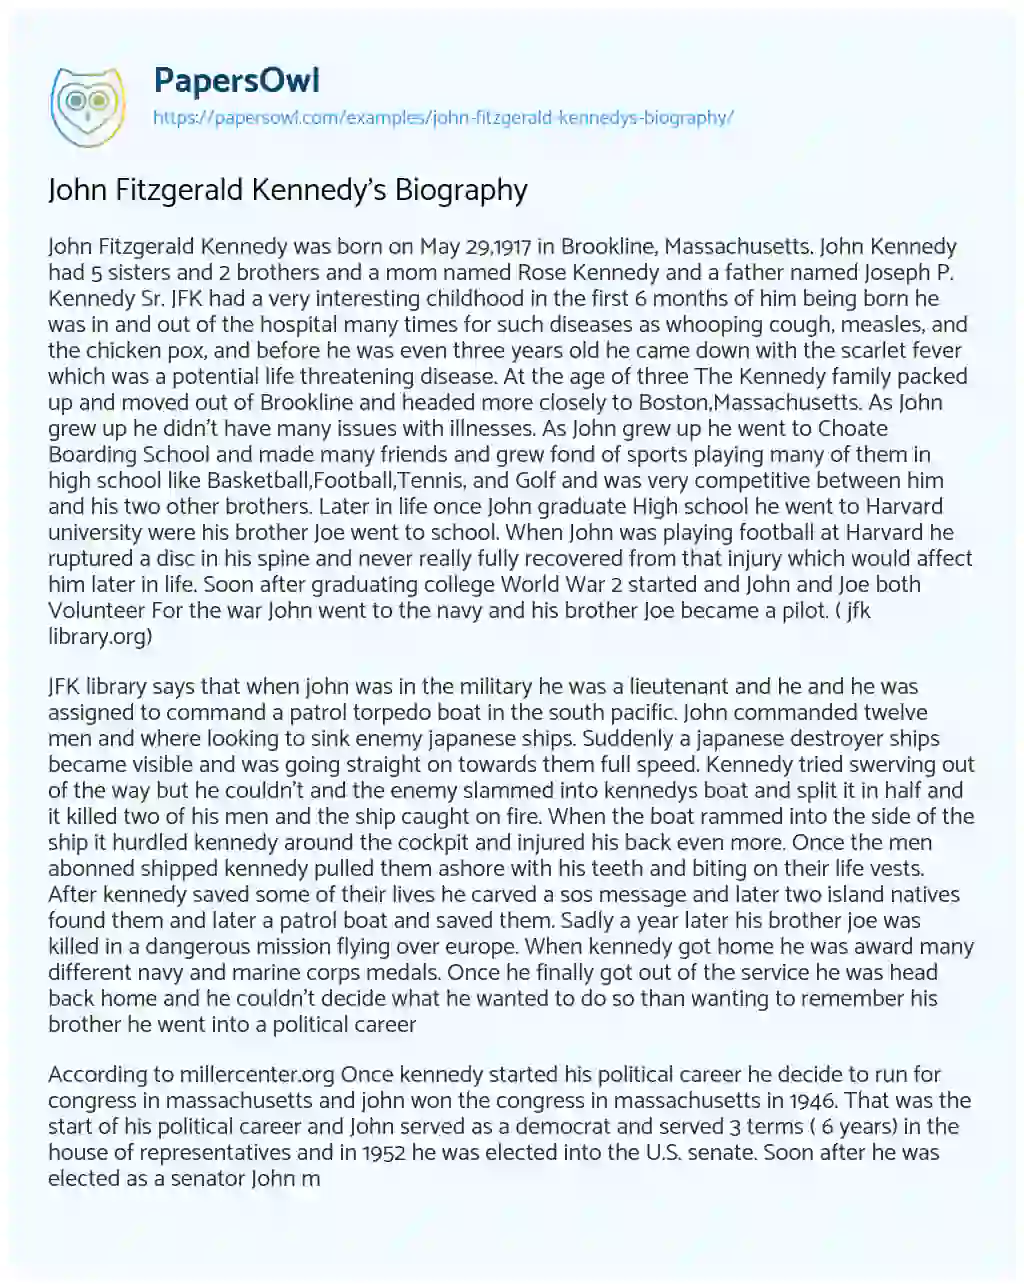 Essay on John Fitzgerald Kennedy’s Biography